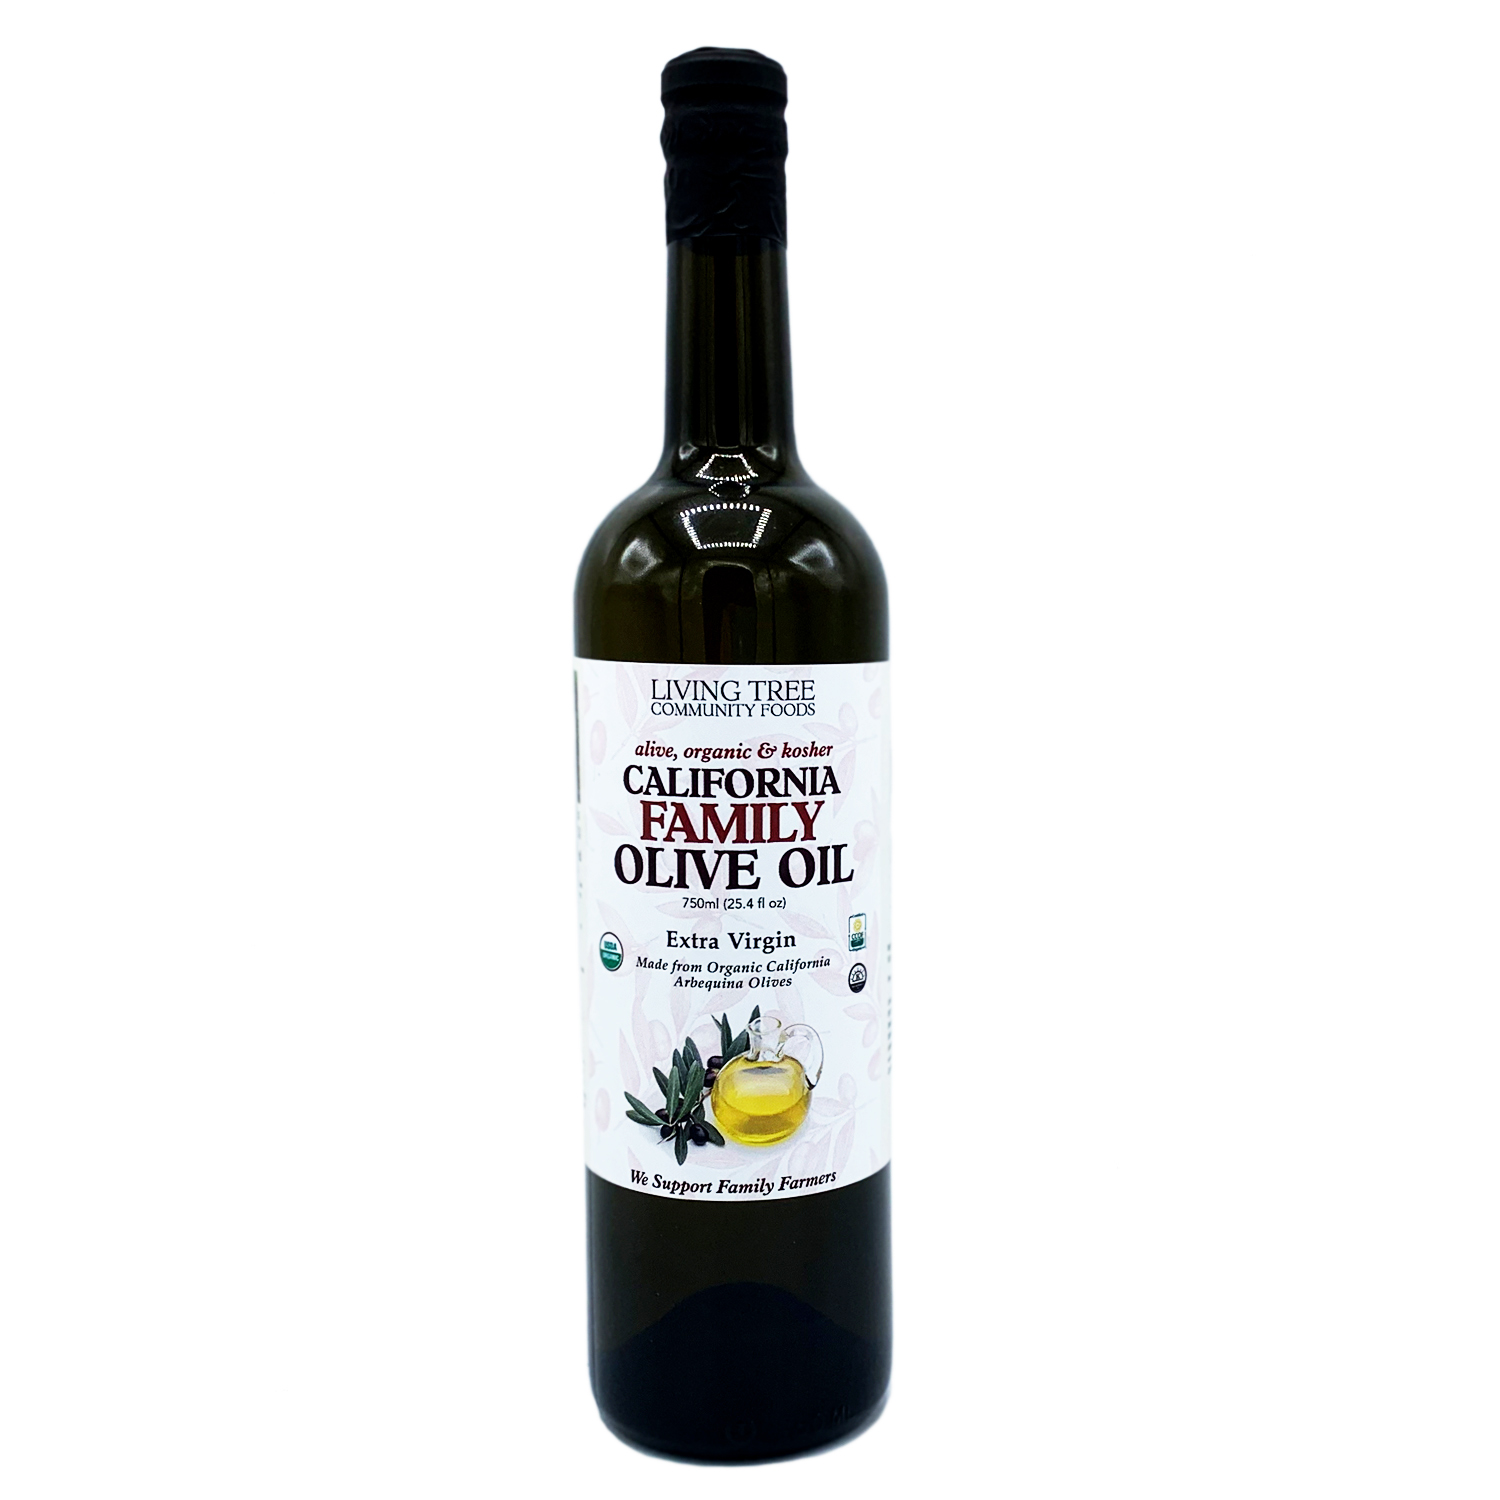 Olive Extra Virgin Oil (Certified Organic) - Buy Bulk